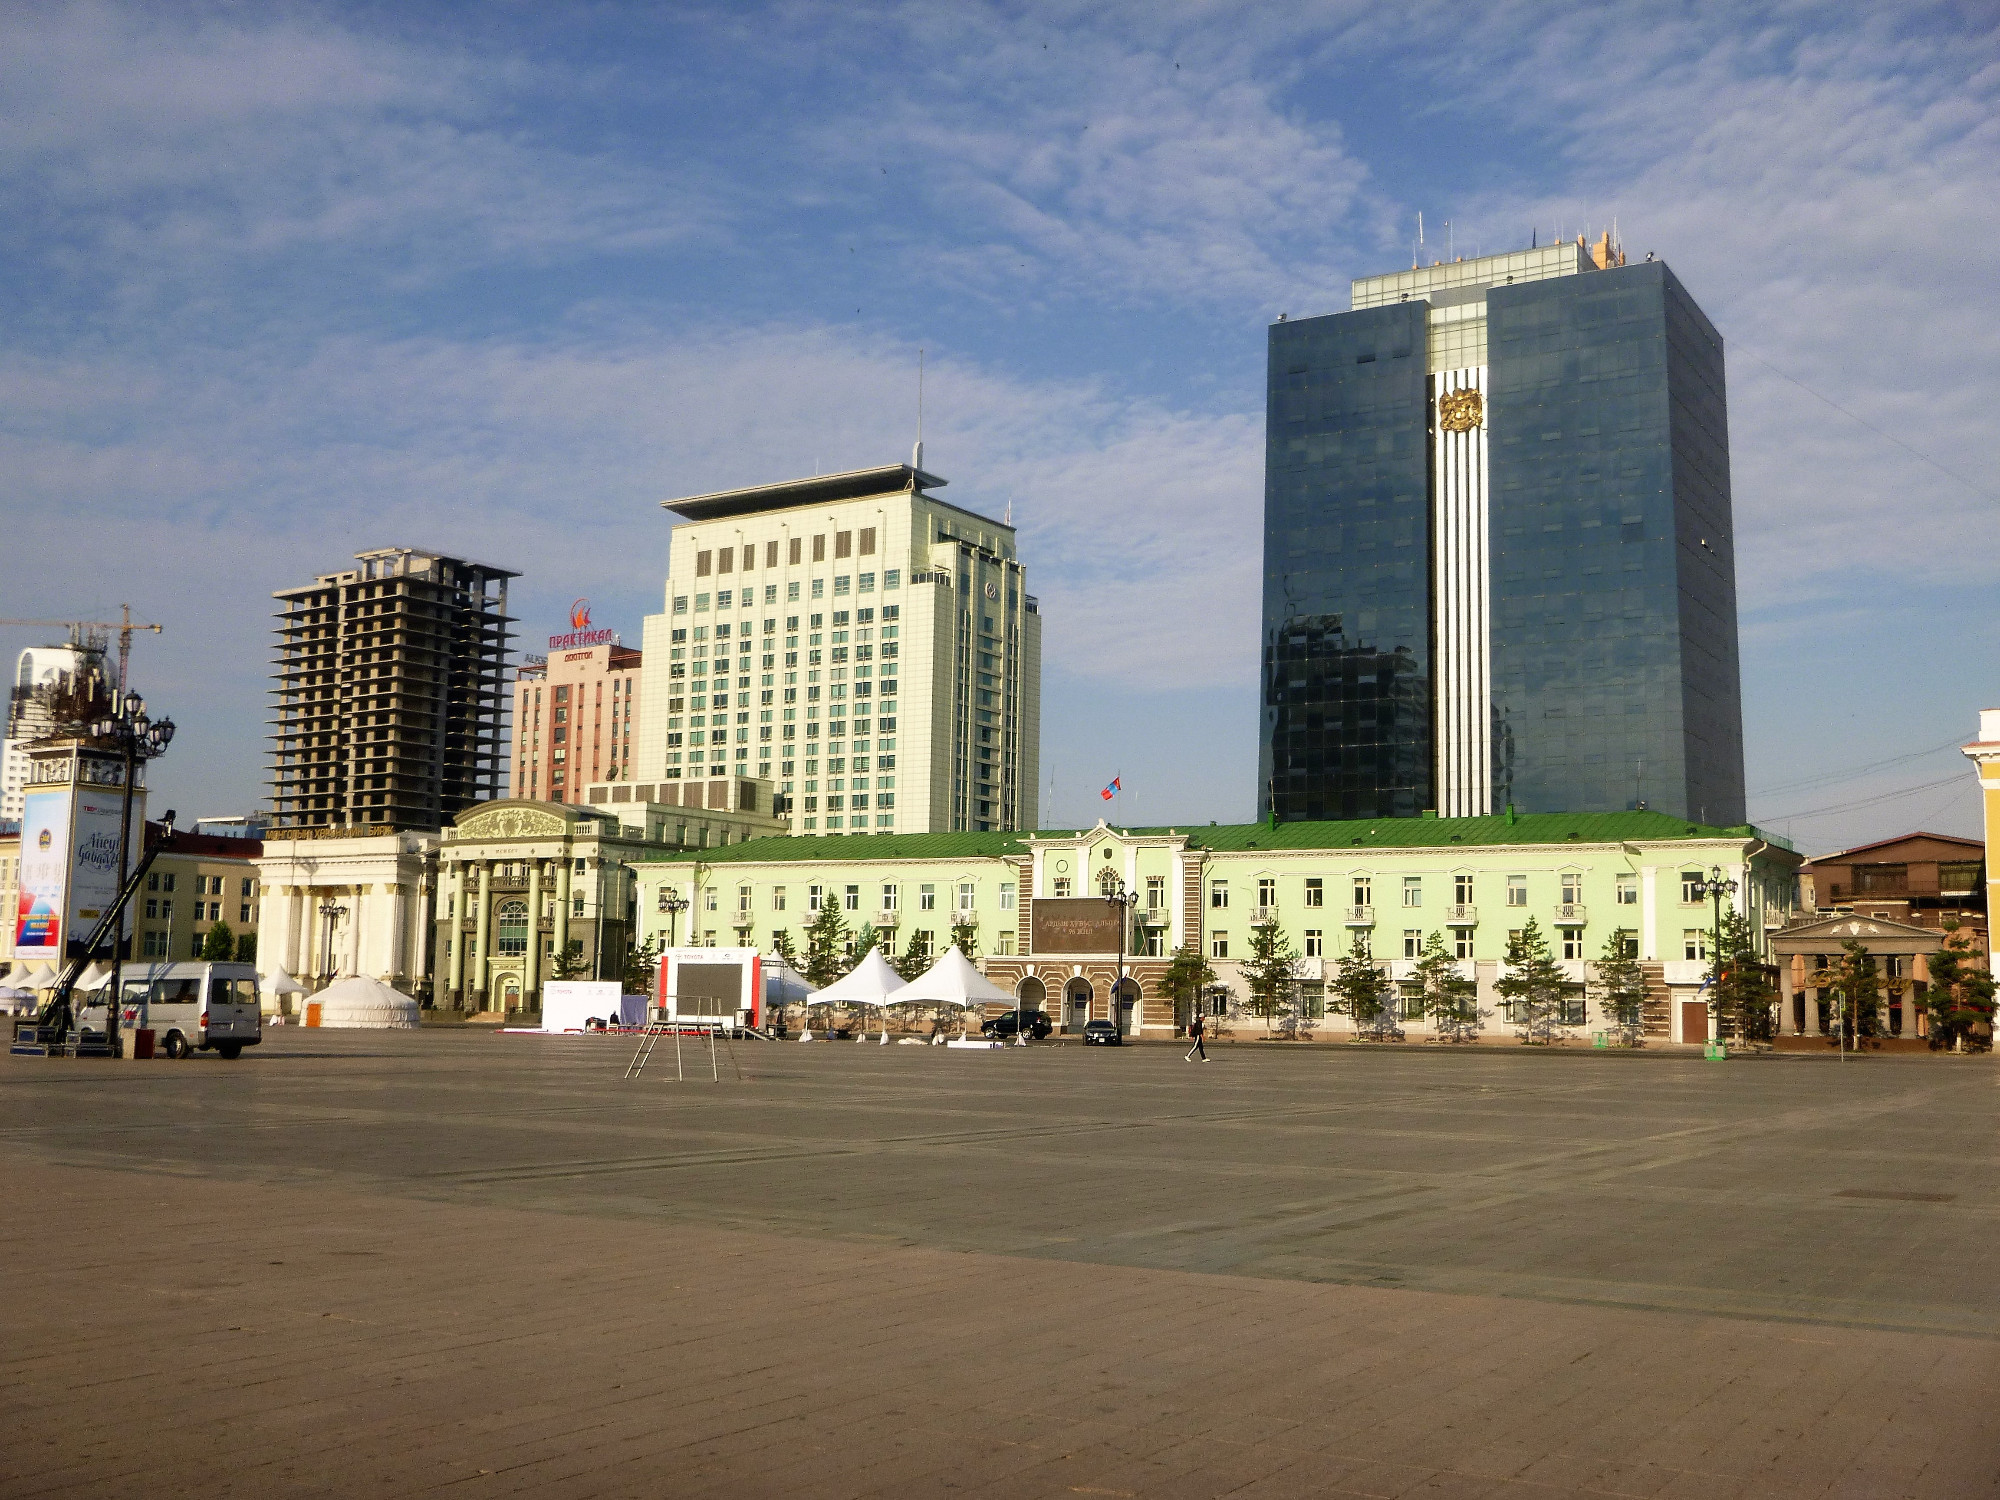 Sükhbaatar Square, Mongolia